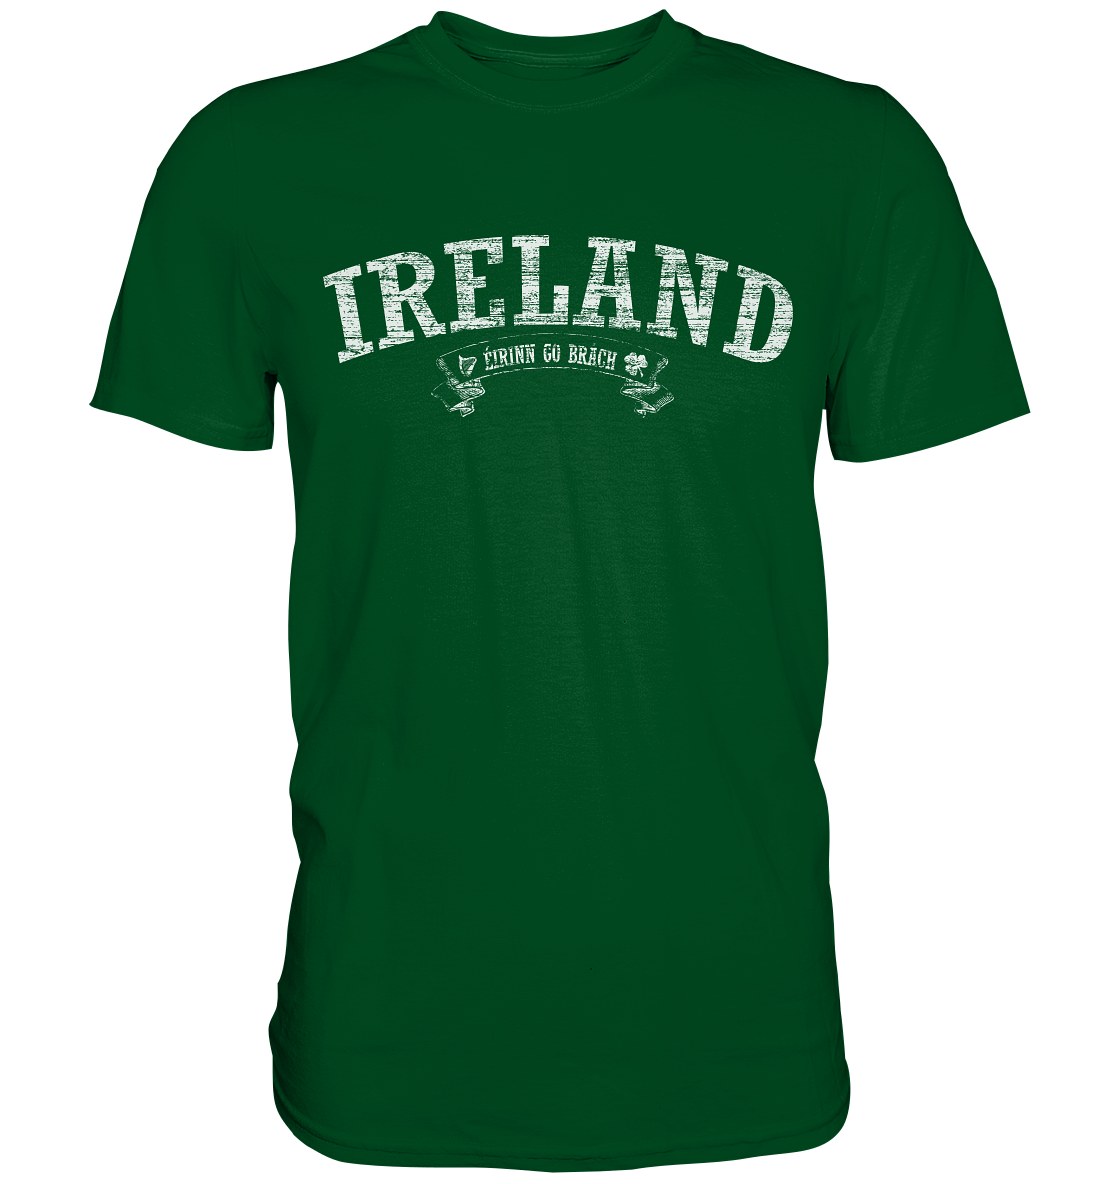 "Ireland - Éirinn go brách" - Premium Shirt